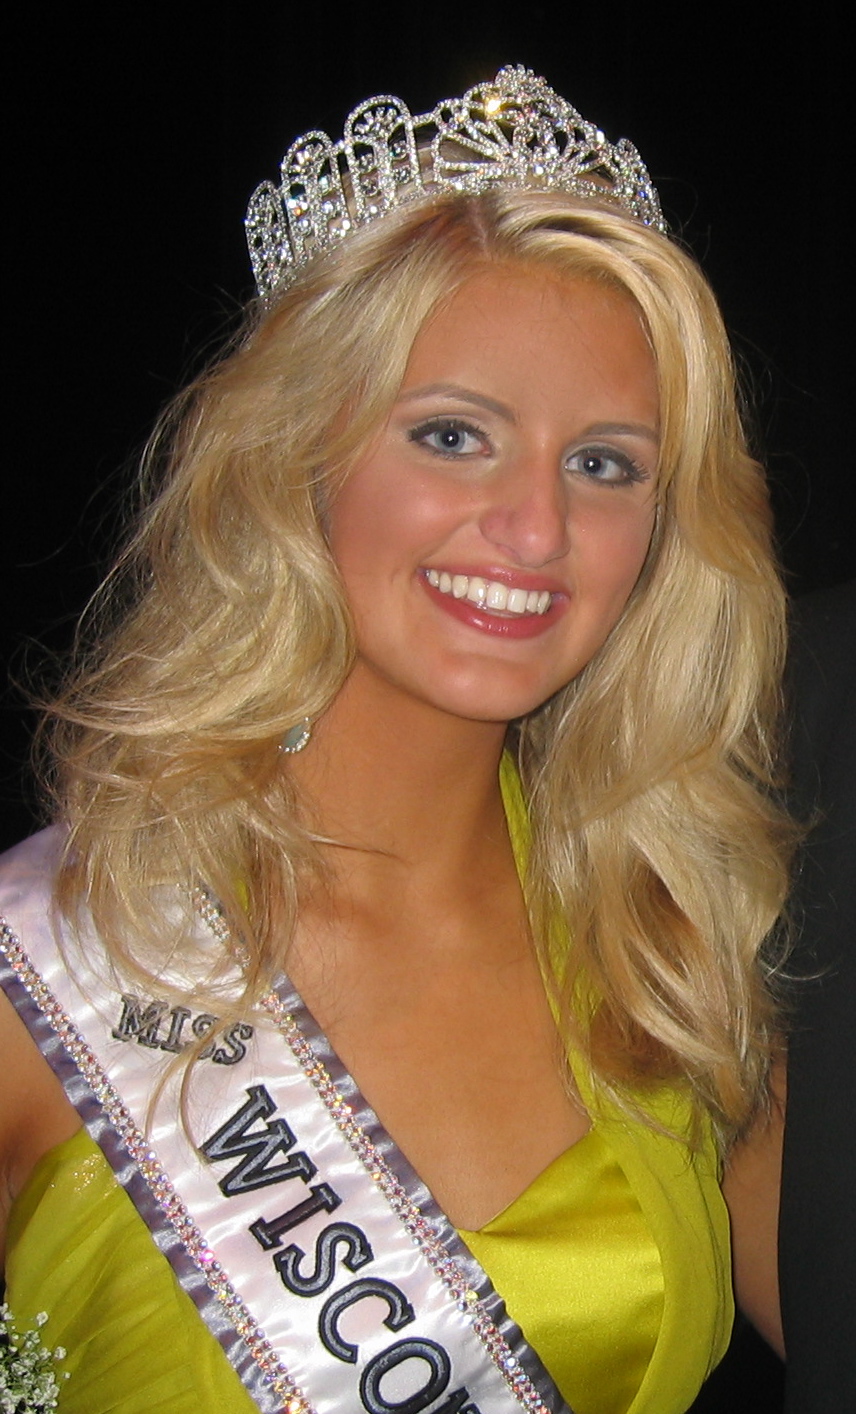 Miss Wisconsin Teen USA - Wikipedia Republished // WIKI 2.